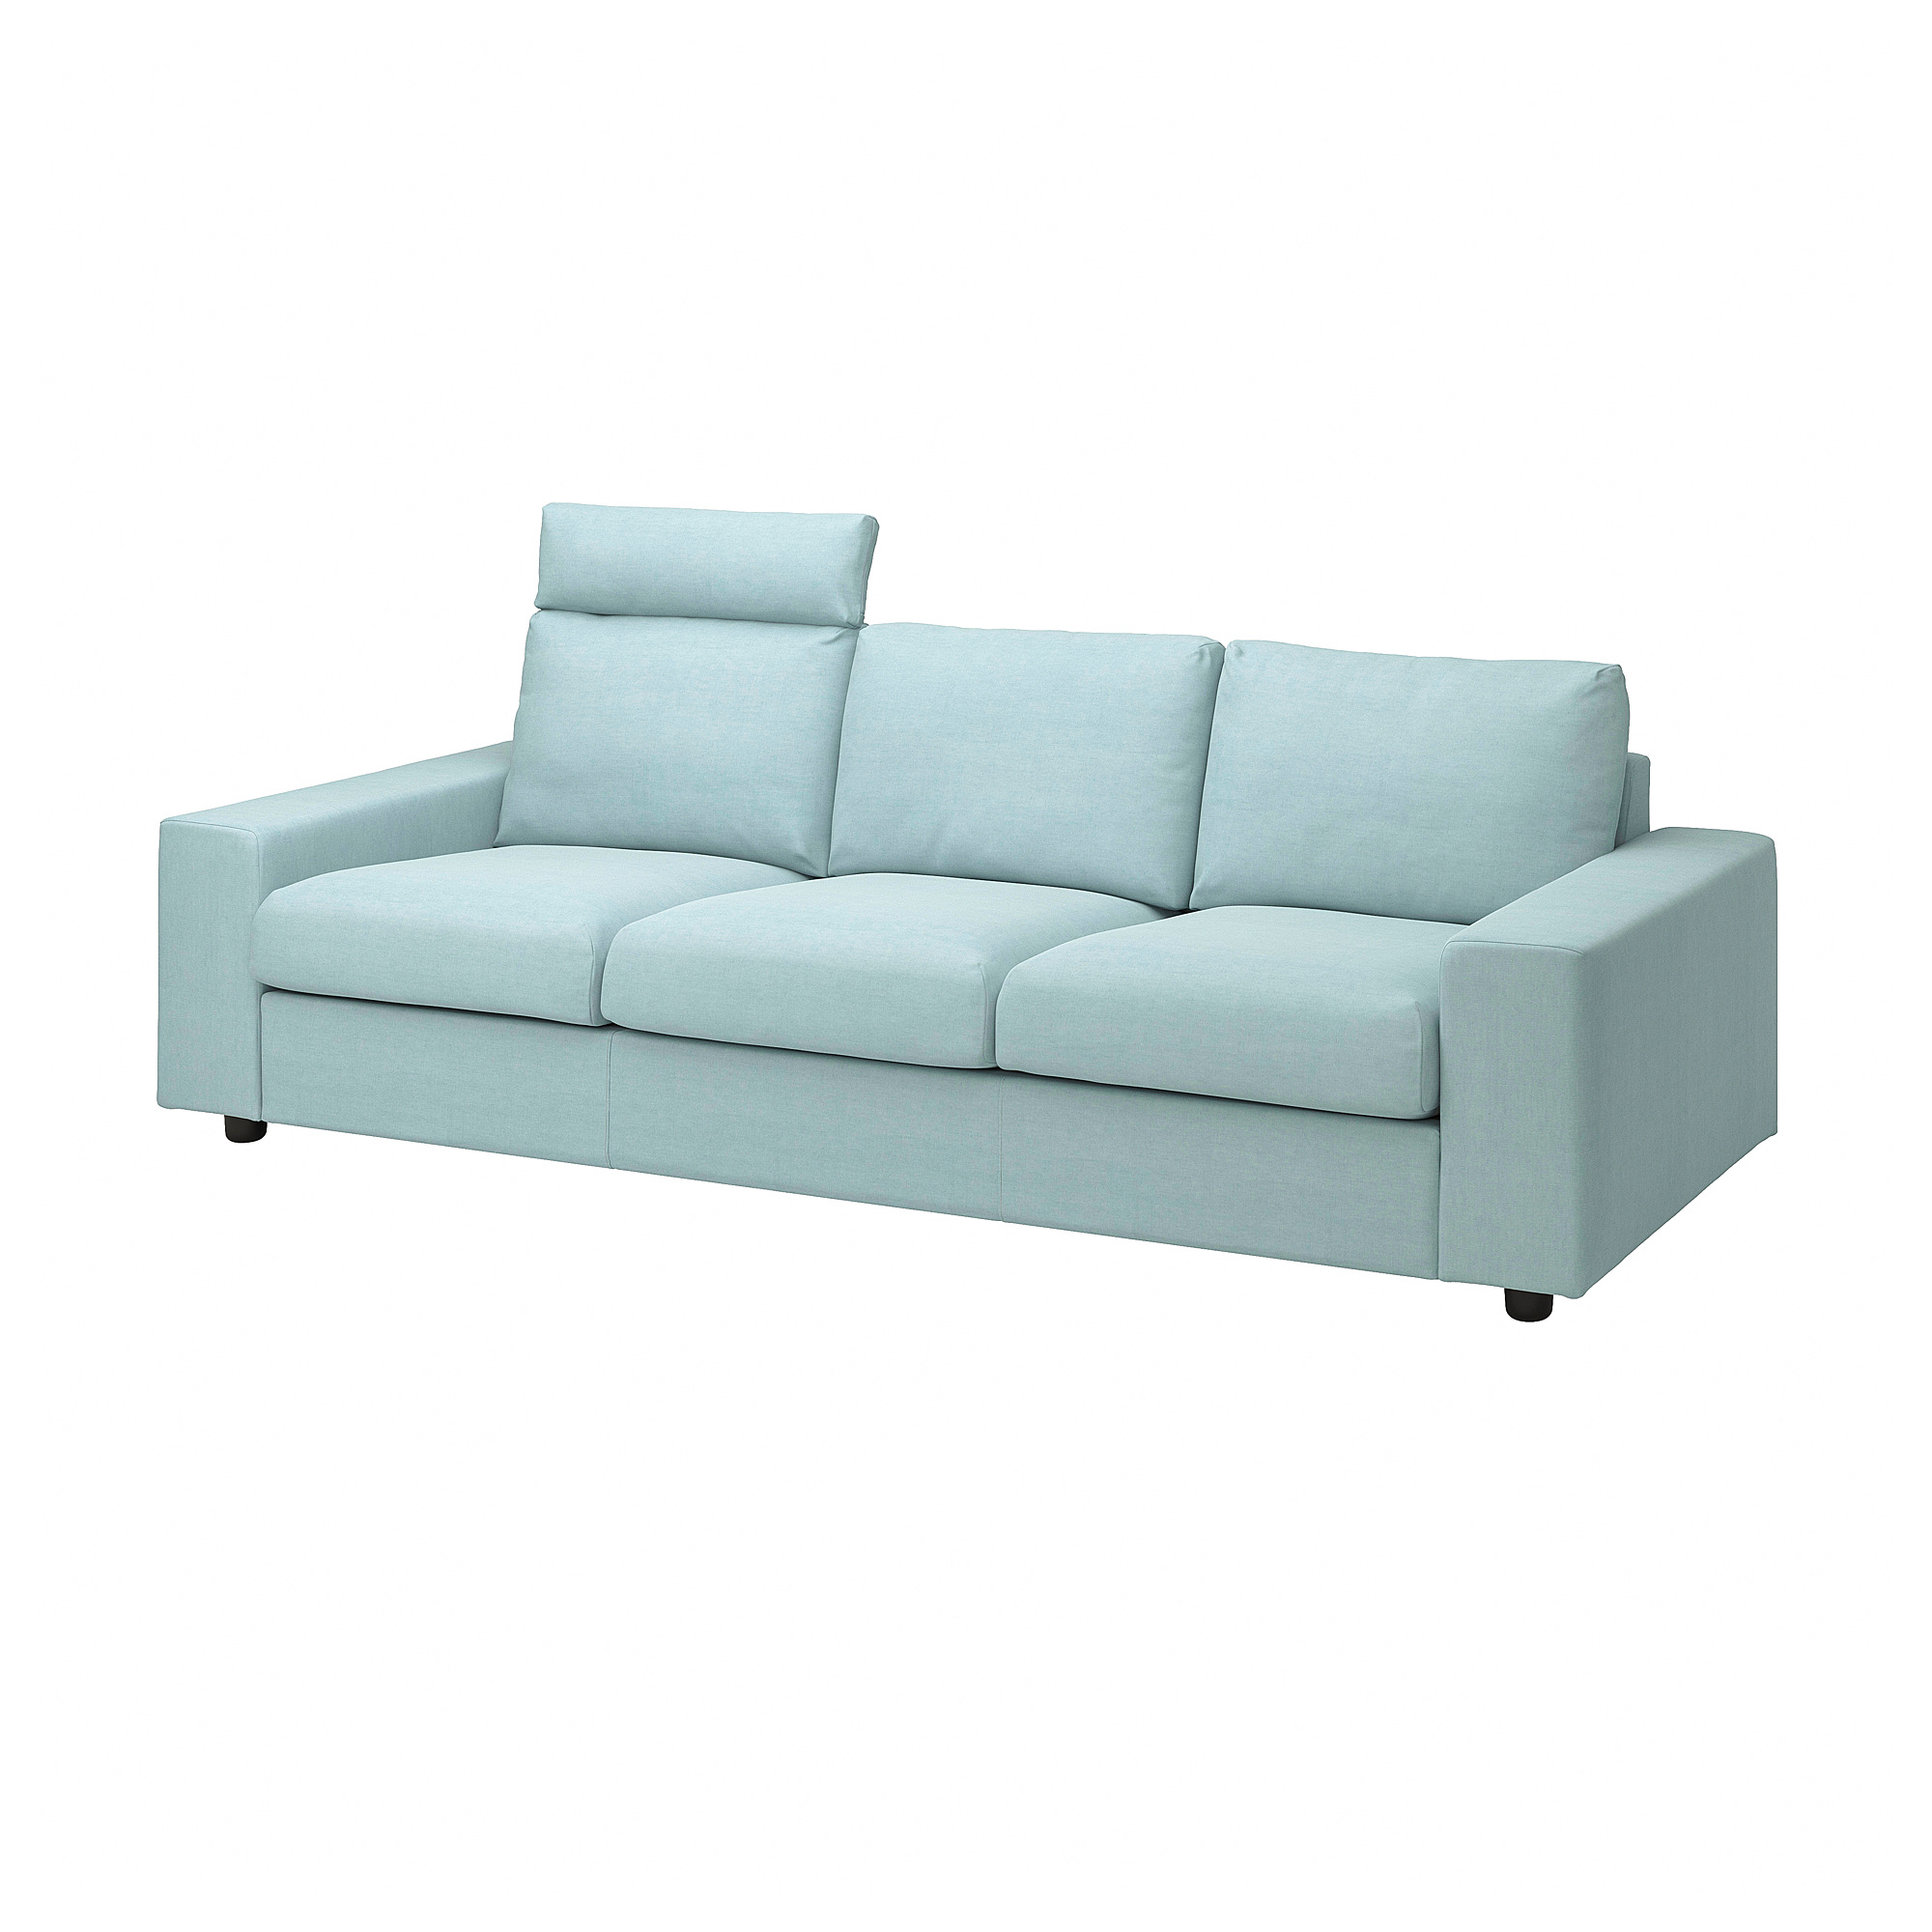 VIMLE cover for 3-seat sofa